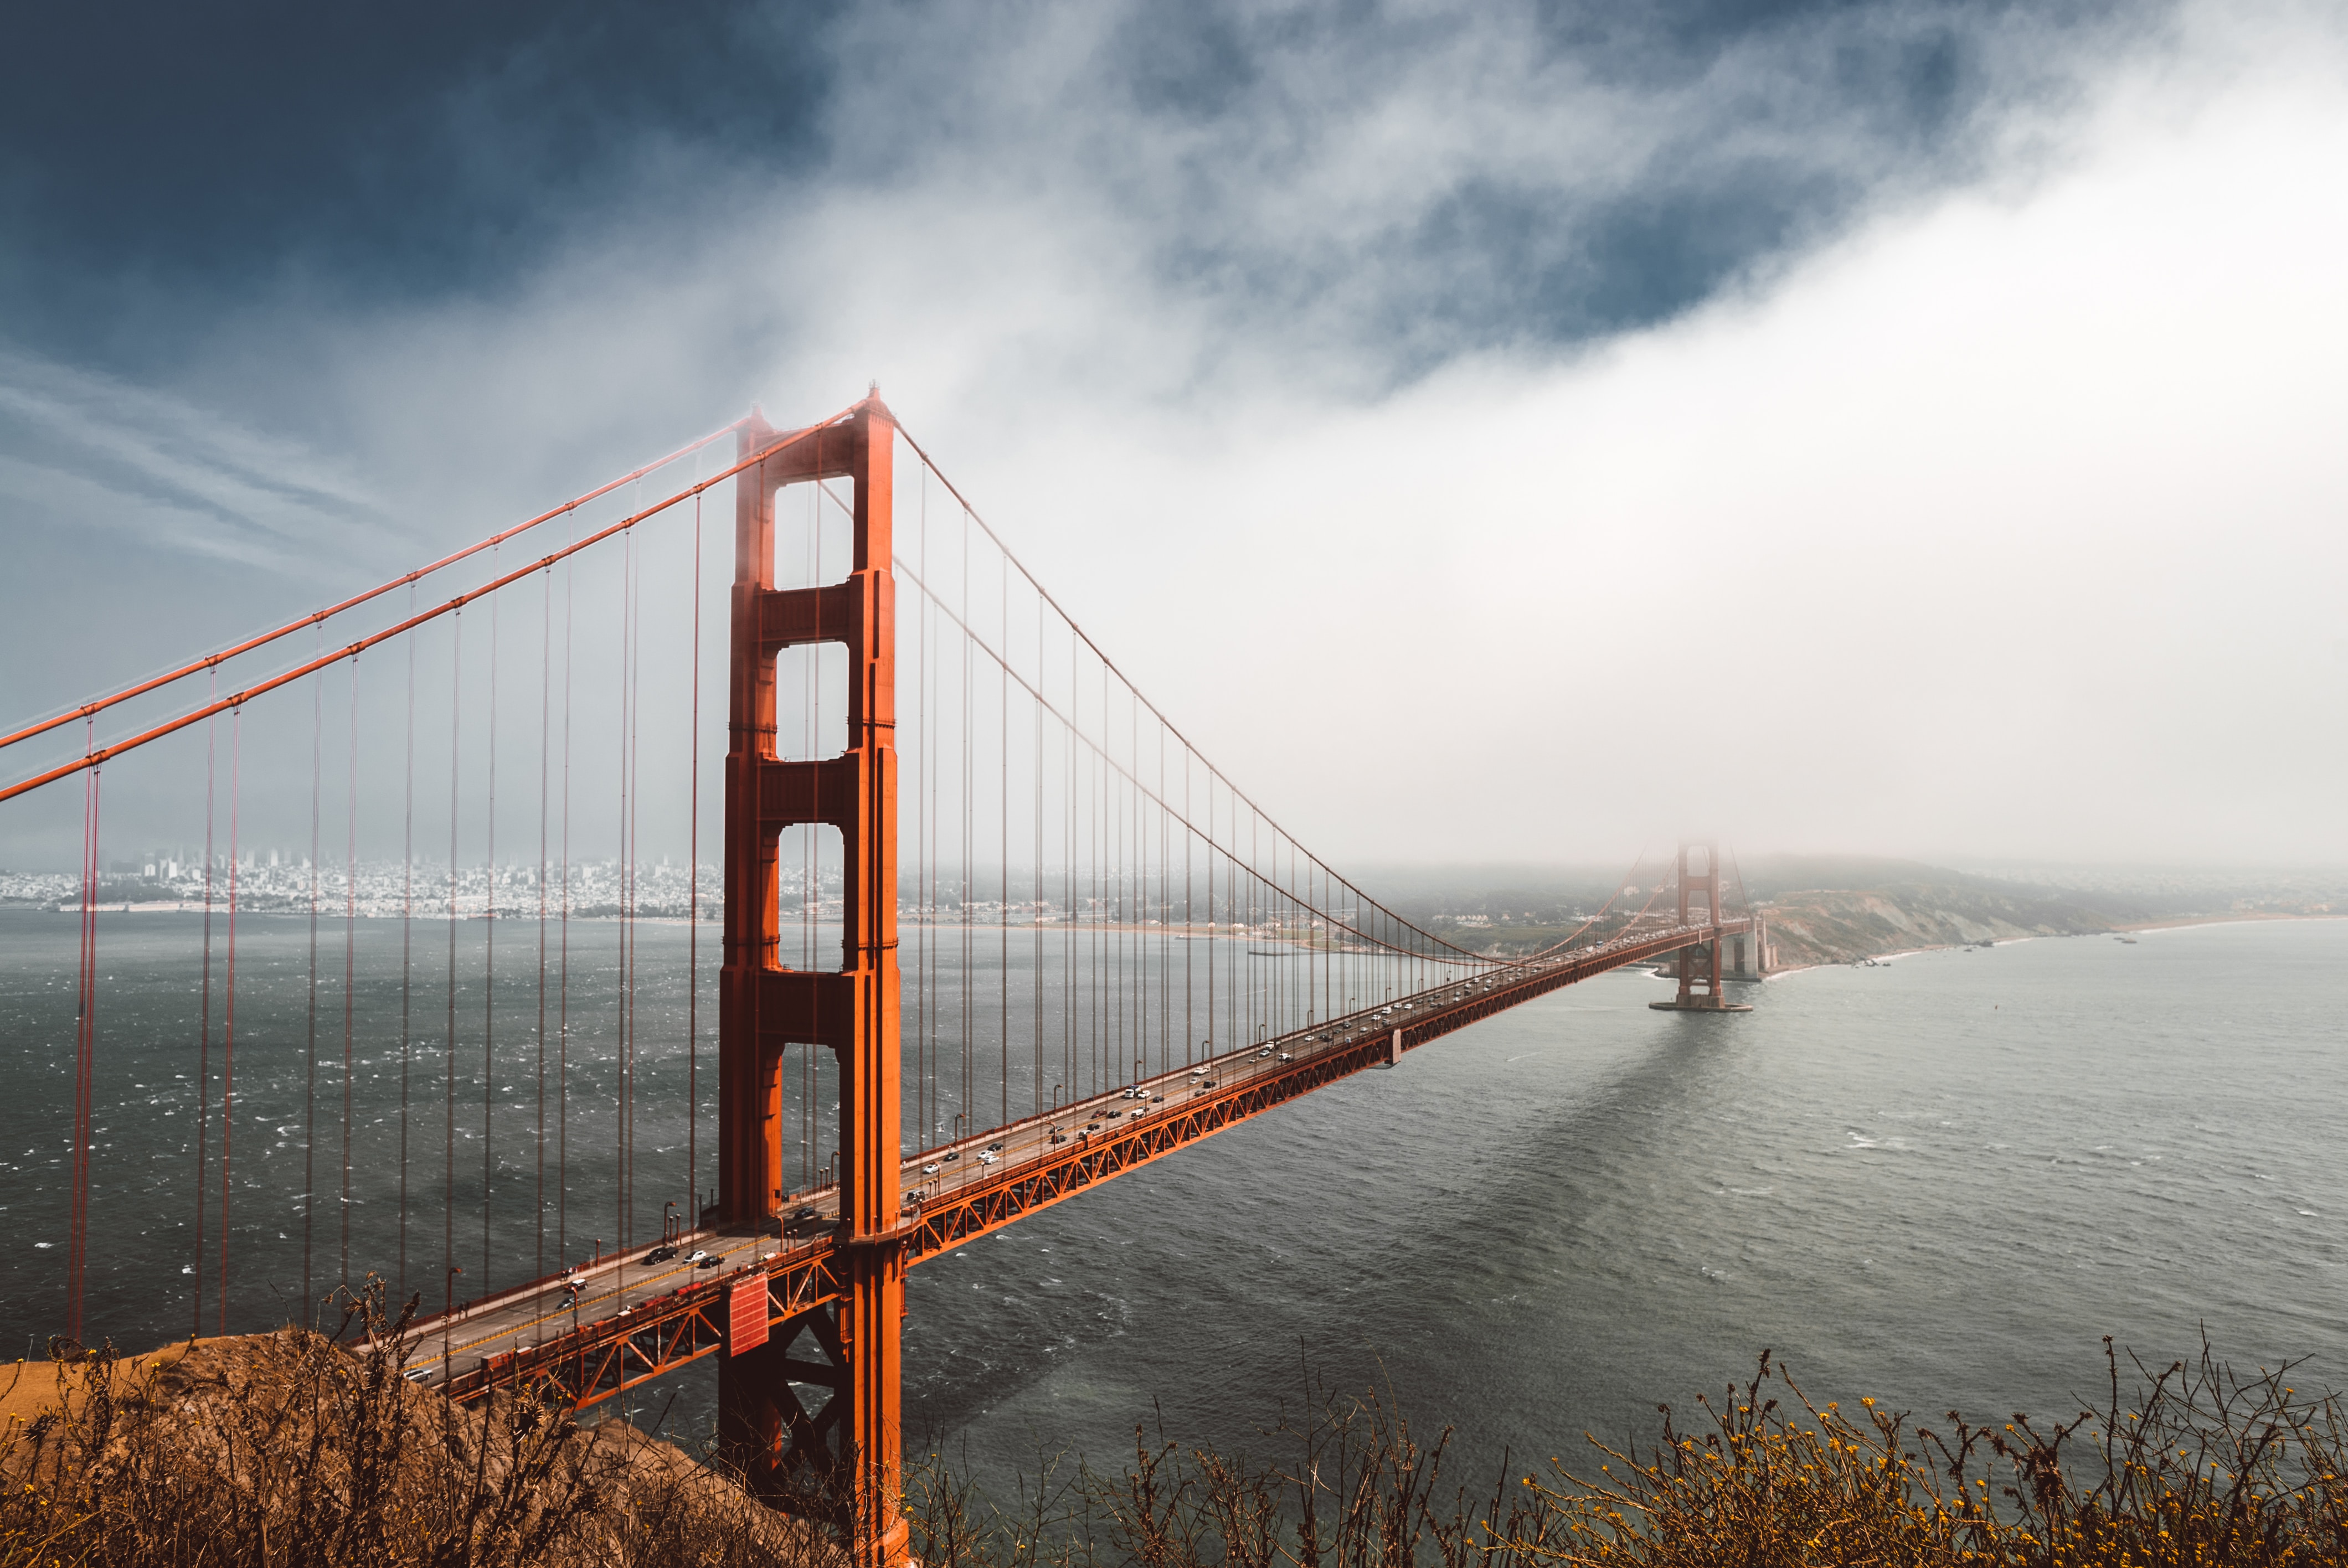 Golden Gate 4k Ultra HD Wallpaper By Gerson Repreza